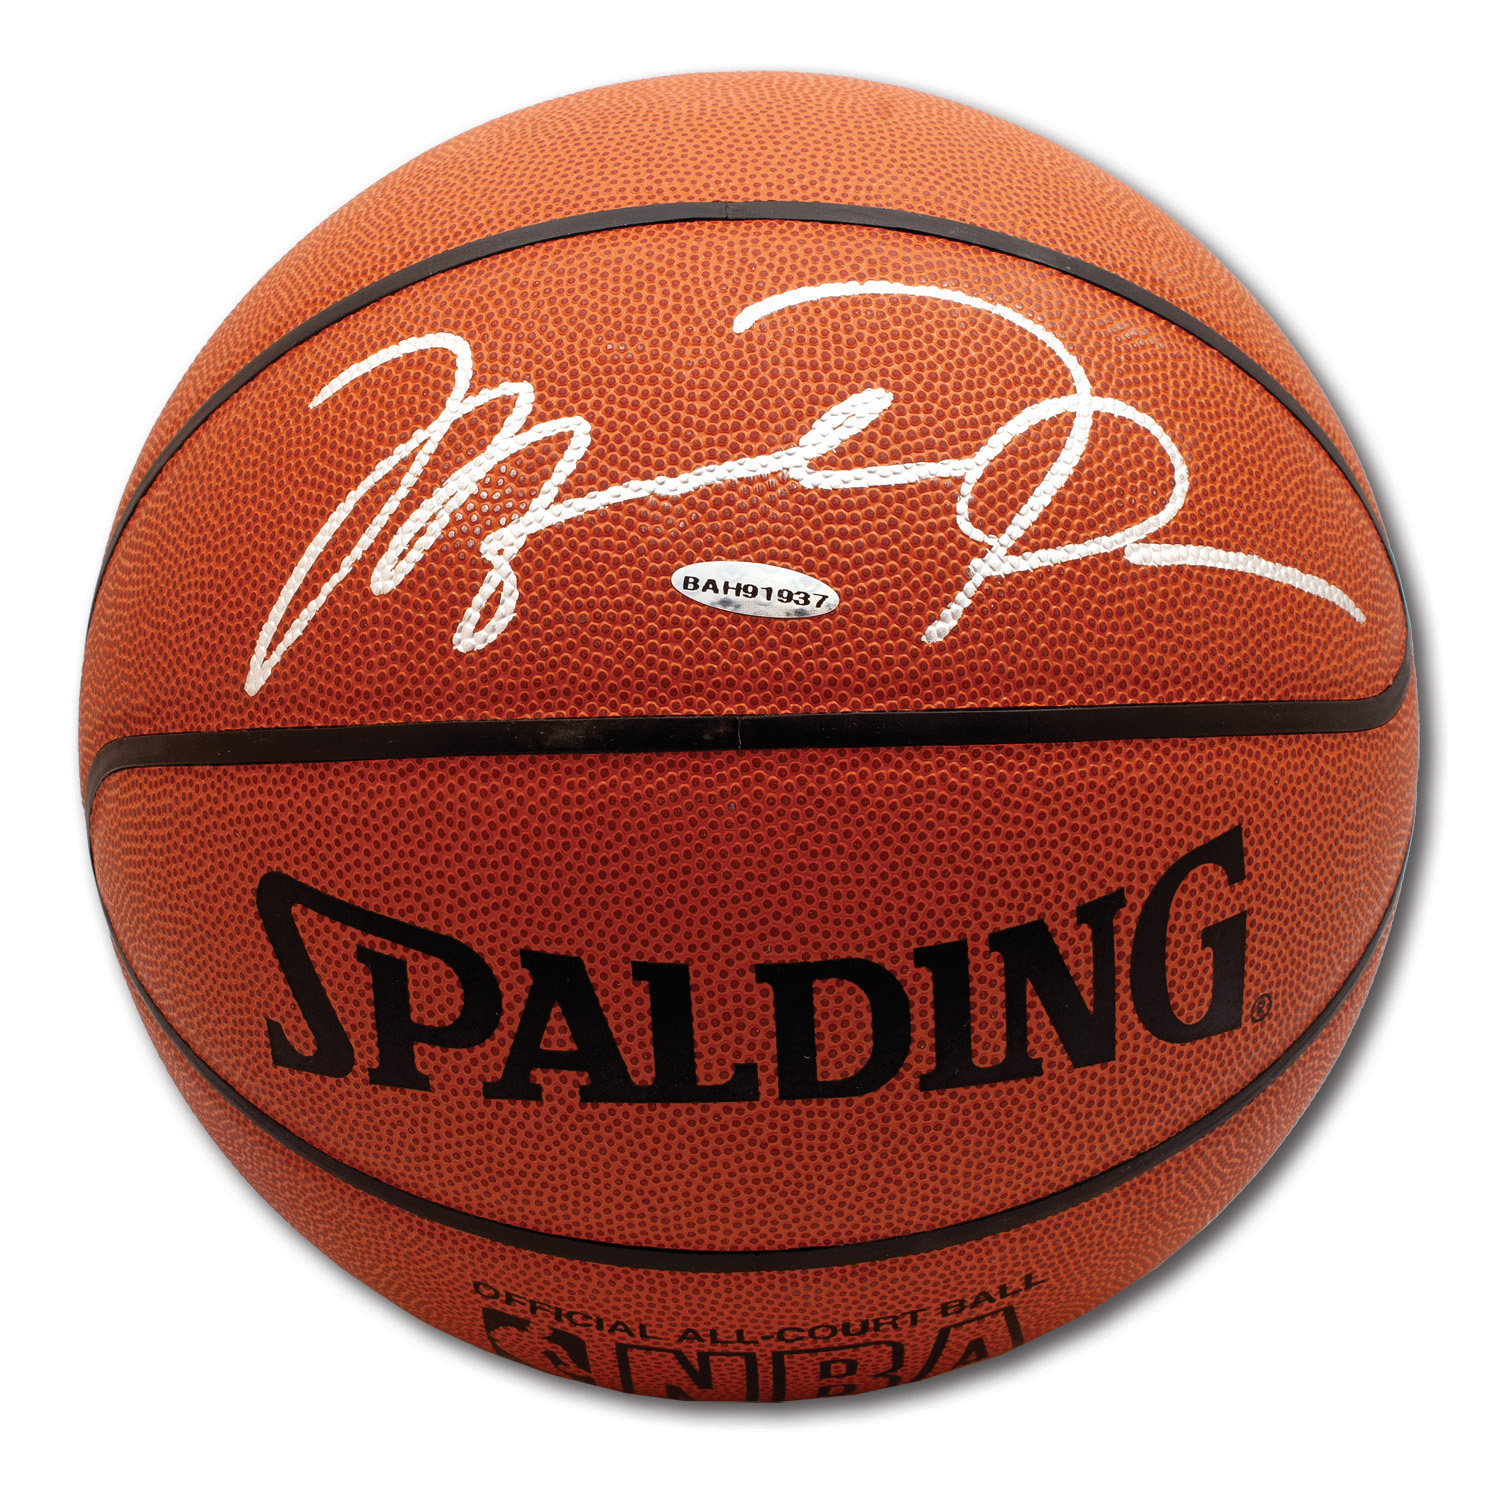 jordan autographed basketball